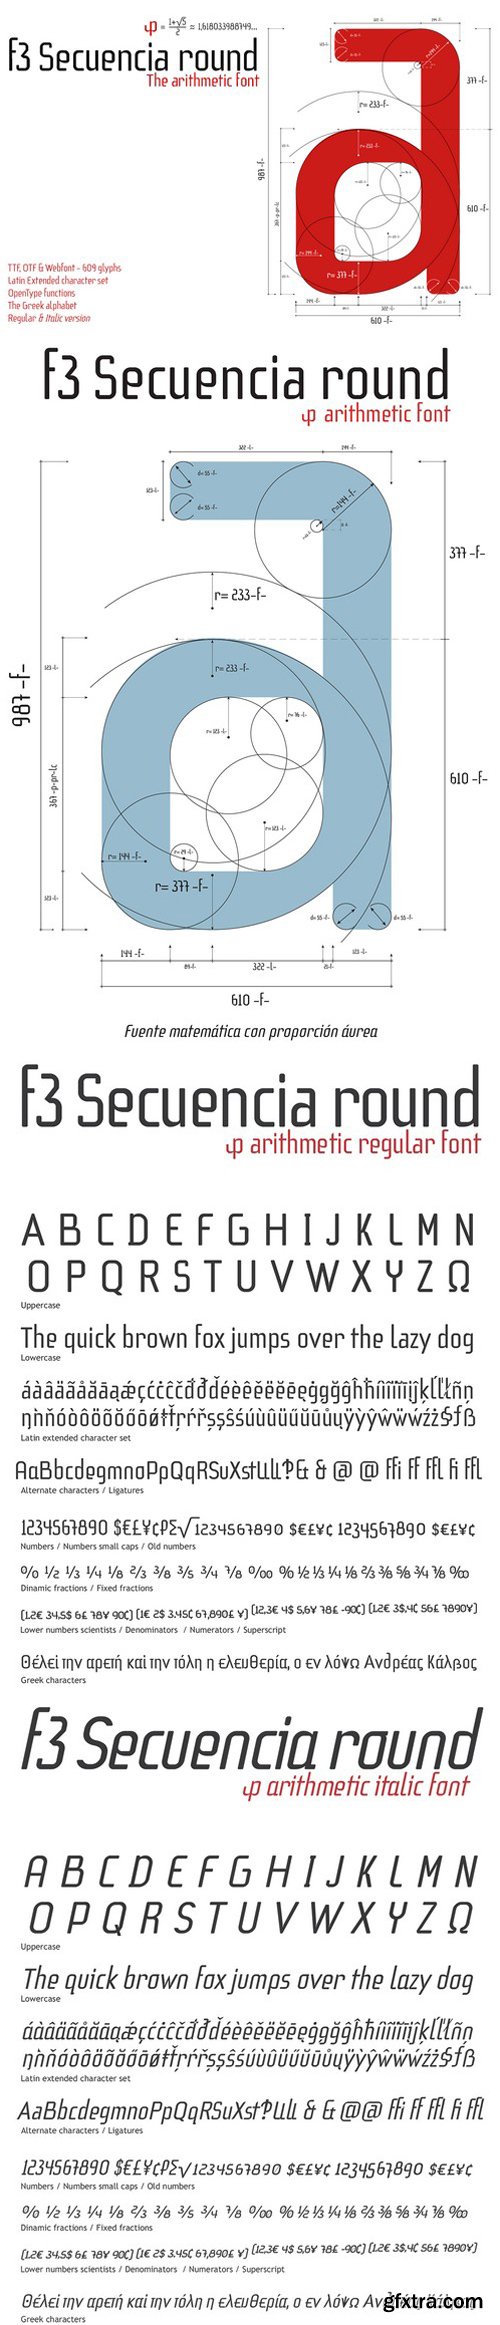 CM - f3 Secuencia round